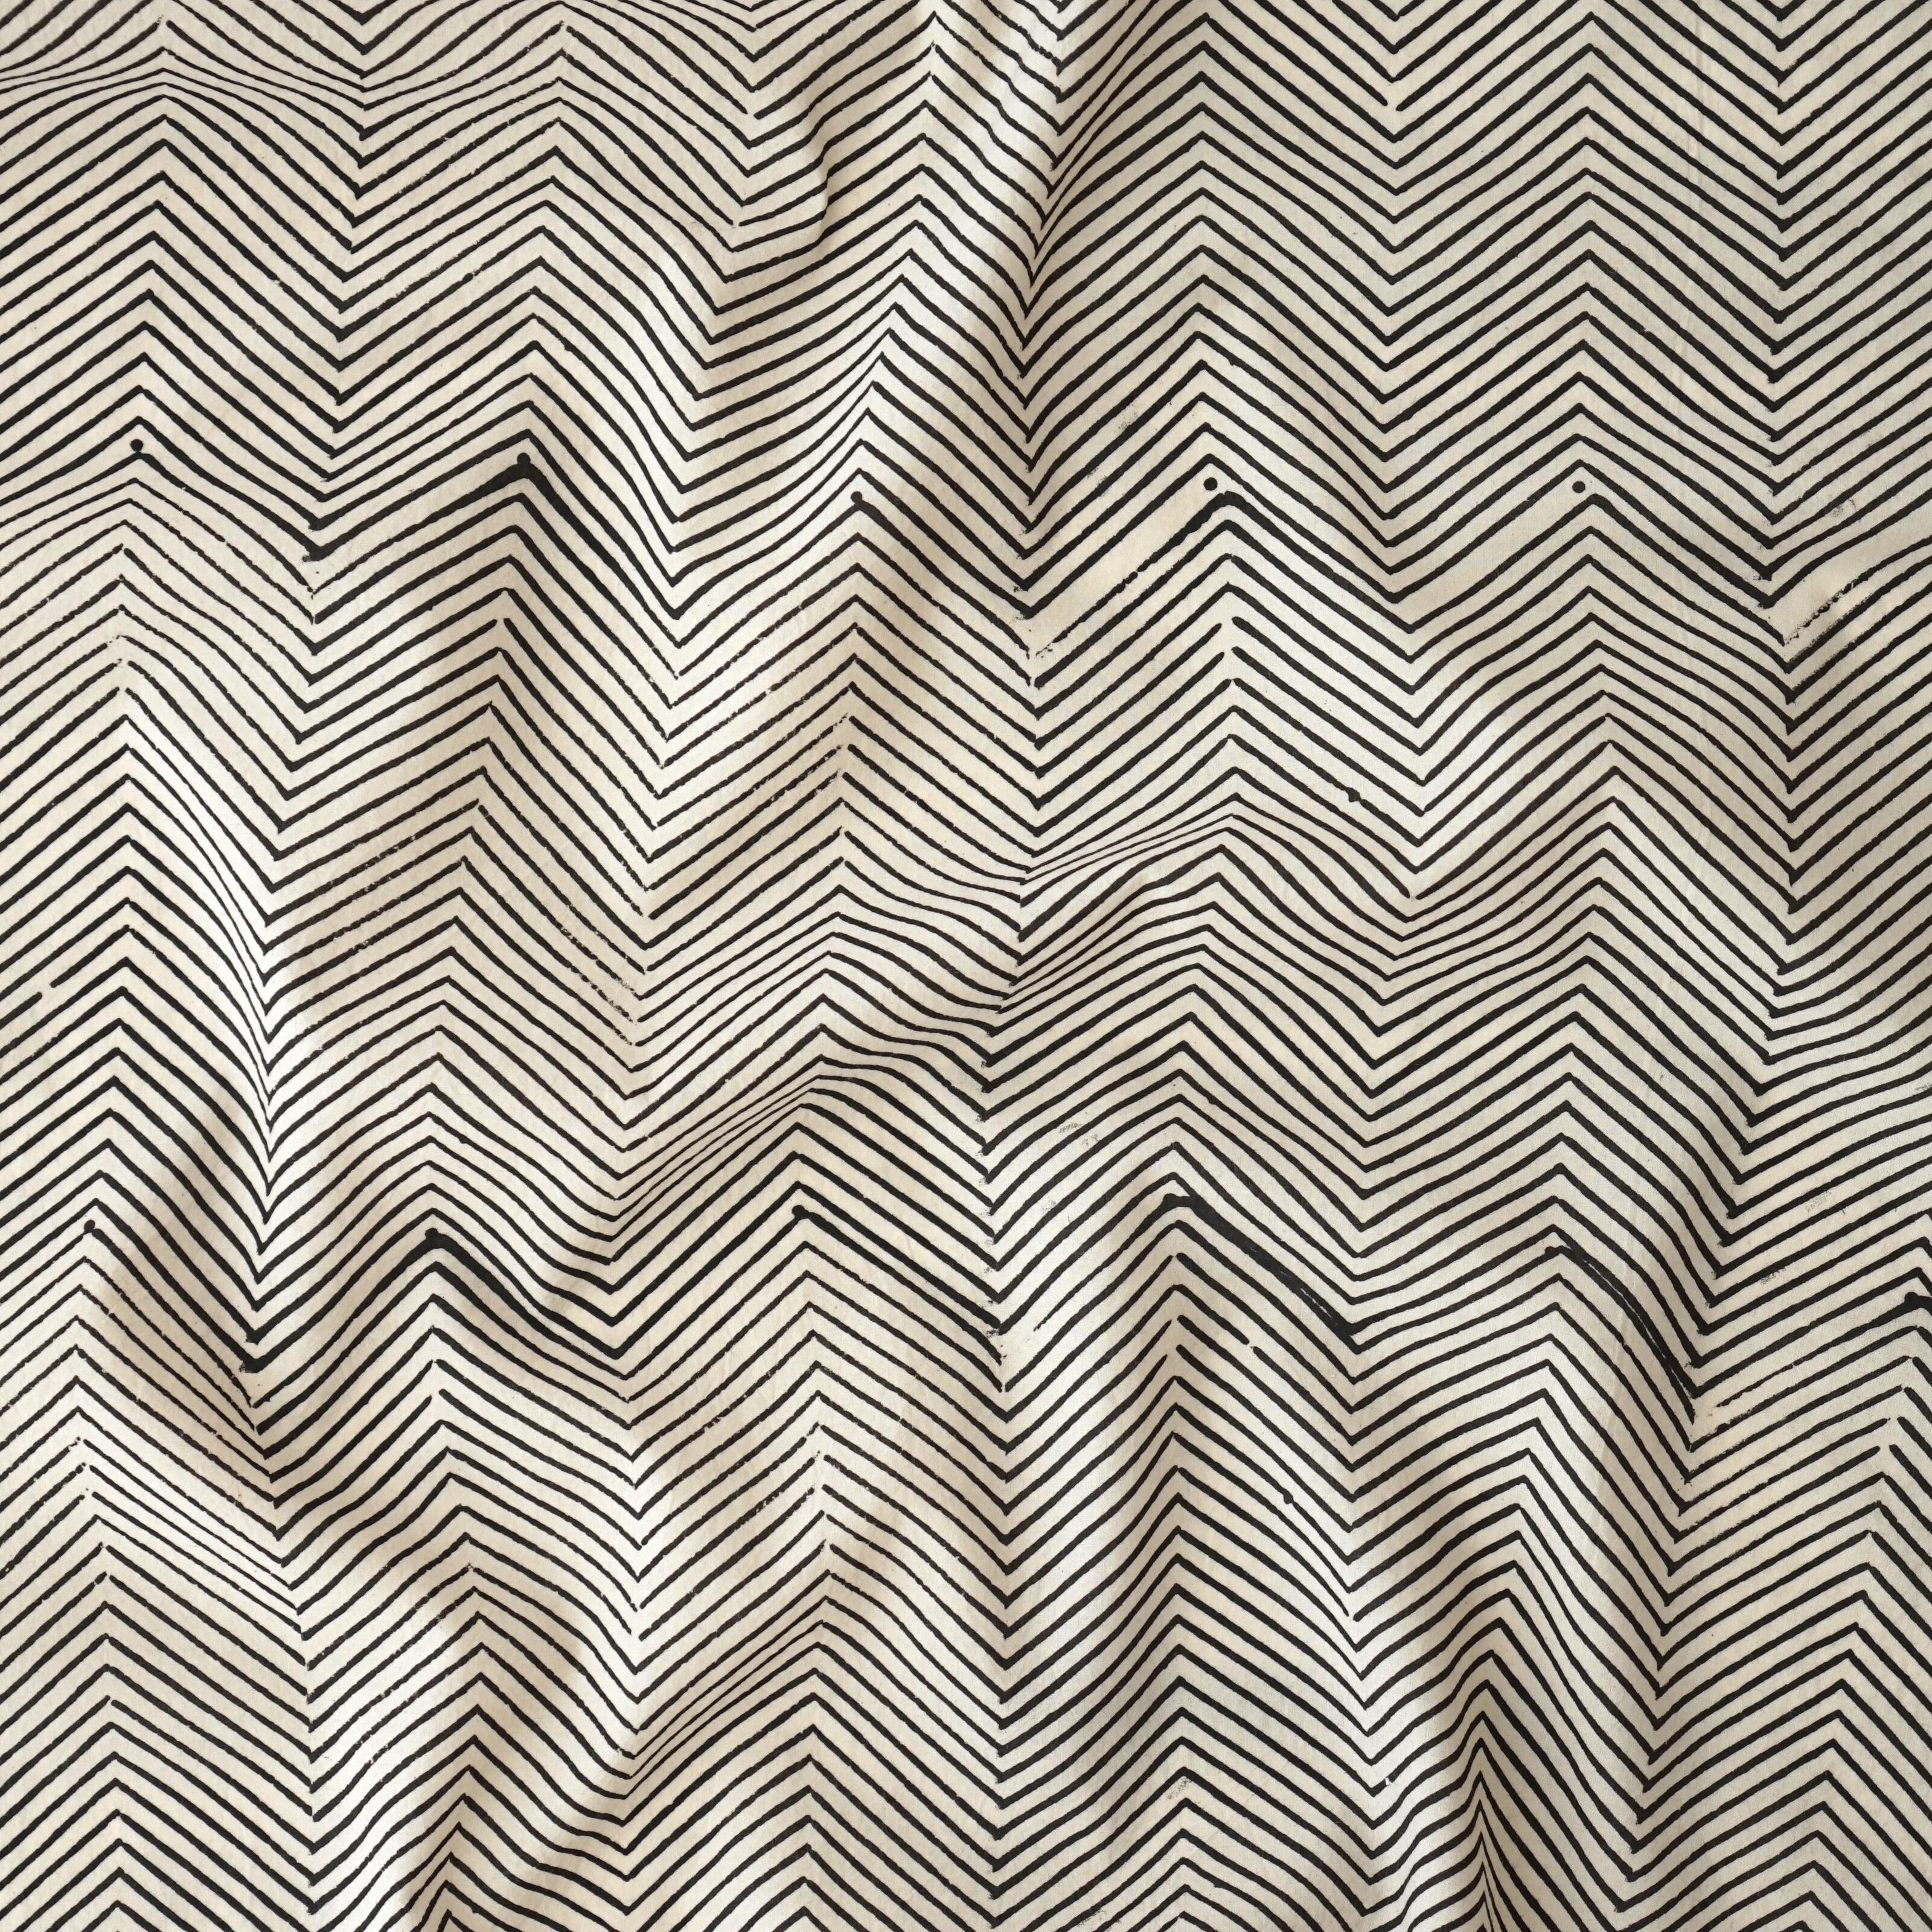 SIK62 - Block-Printed Cloth - Unbleached Cotton Fabric - Black Dye - ZigZag Design - Contrast